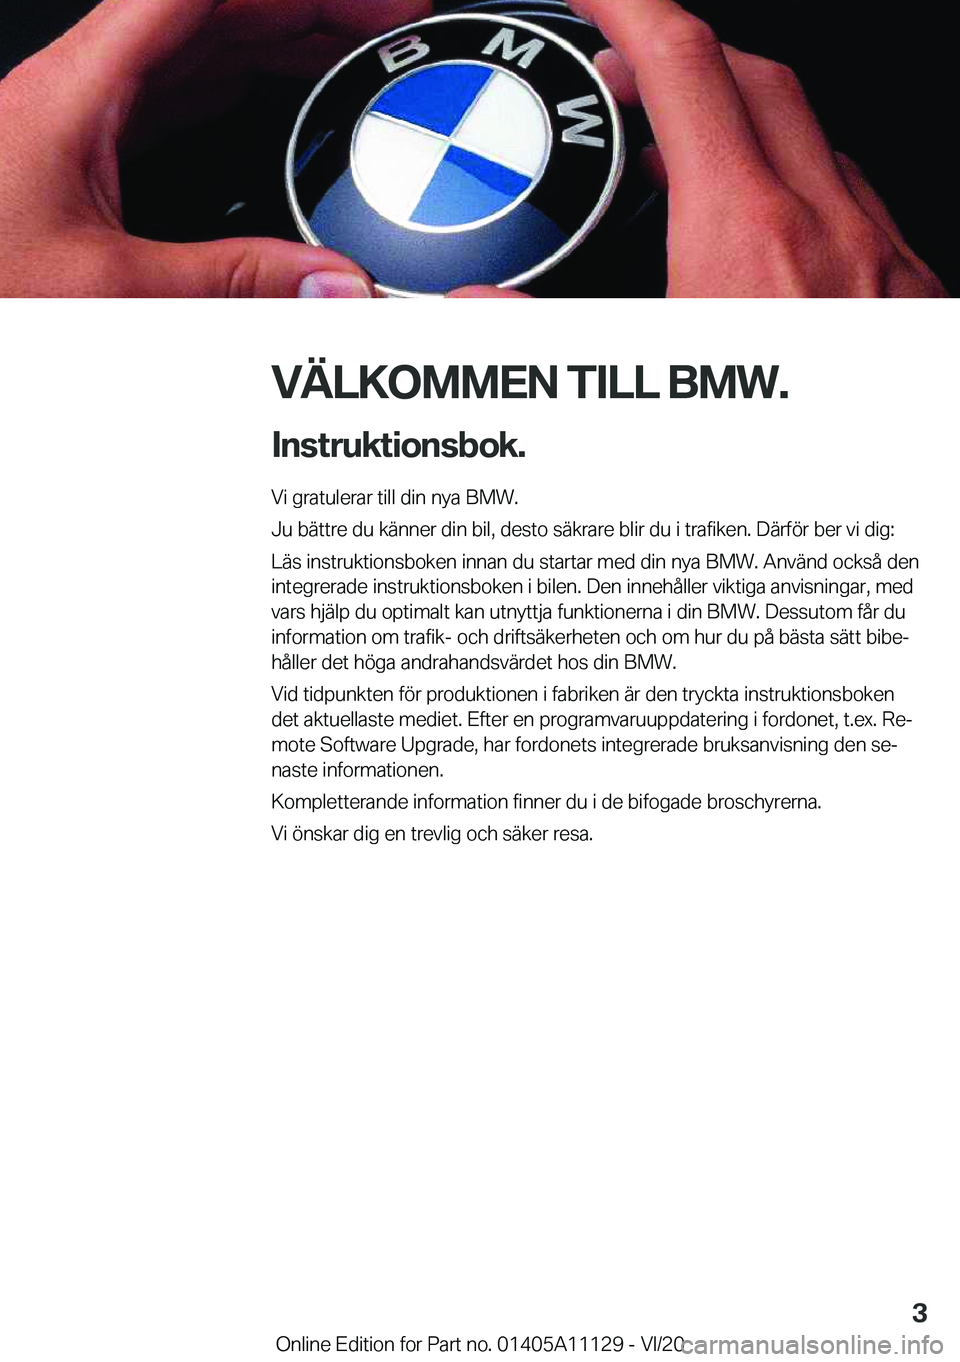 BMW 8 SERIES COUPE 2021  InstruktionsbÖcker (in Swedish) �V�Ä�L�K�O�M�M�E�N��T�I�L�L��B�M�W�.�I�n�s�t�r�u�k�t�i�o�n�s�b�o�k�.
�V�i��g�r�a�t�u�l�e�r�a�r��t�i�l�l��d�i�n��n�y�a��B�M�W�.
�J�u��b�ä�t�t�r�e��d�u��k�ä�n�n�e�r��d�i�n��b�i�l�,��d�e�